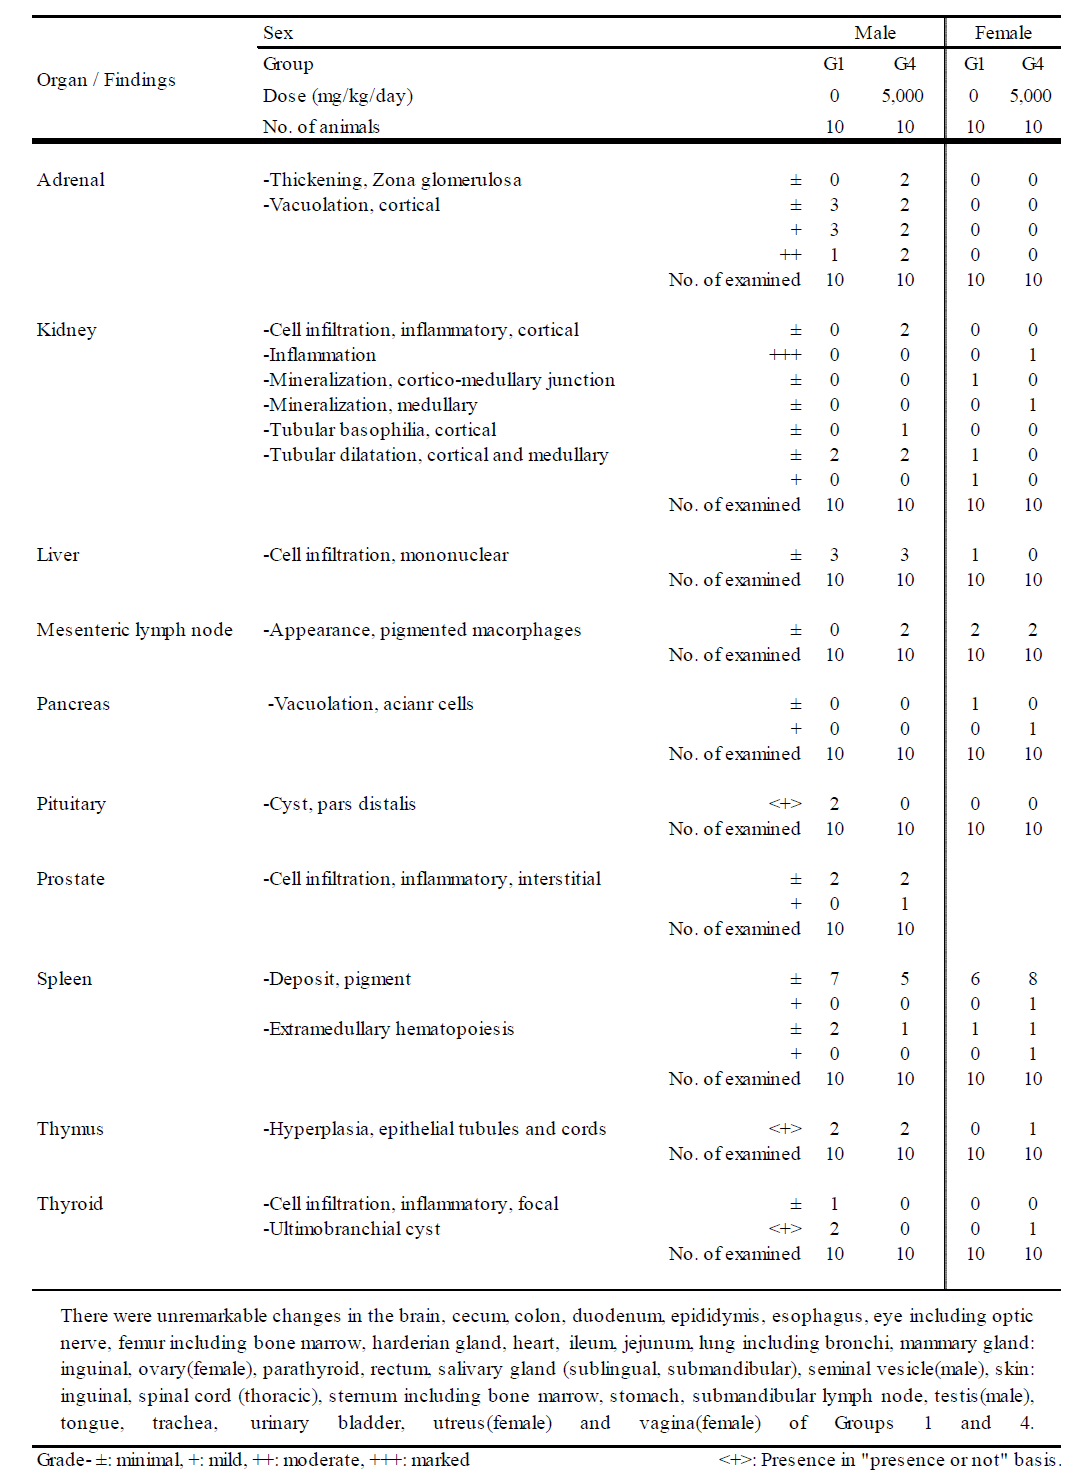 Summary of histopathological findings (Main Group)